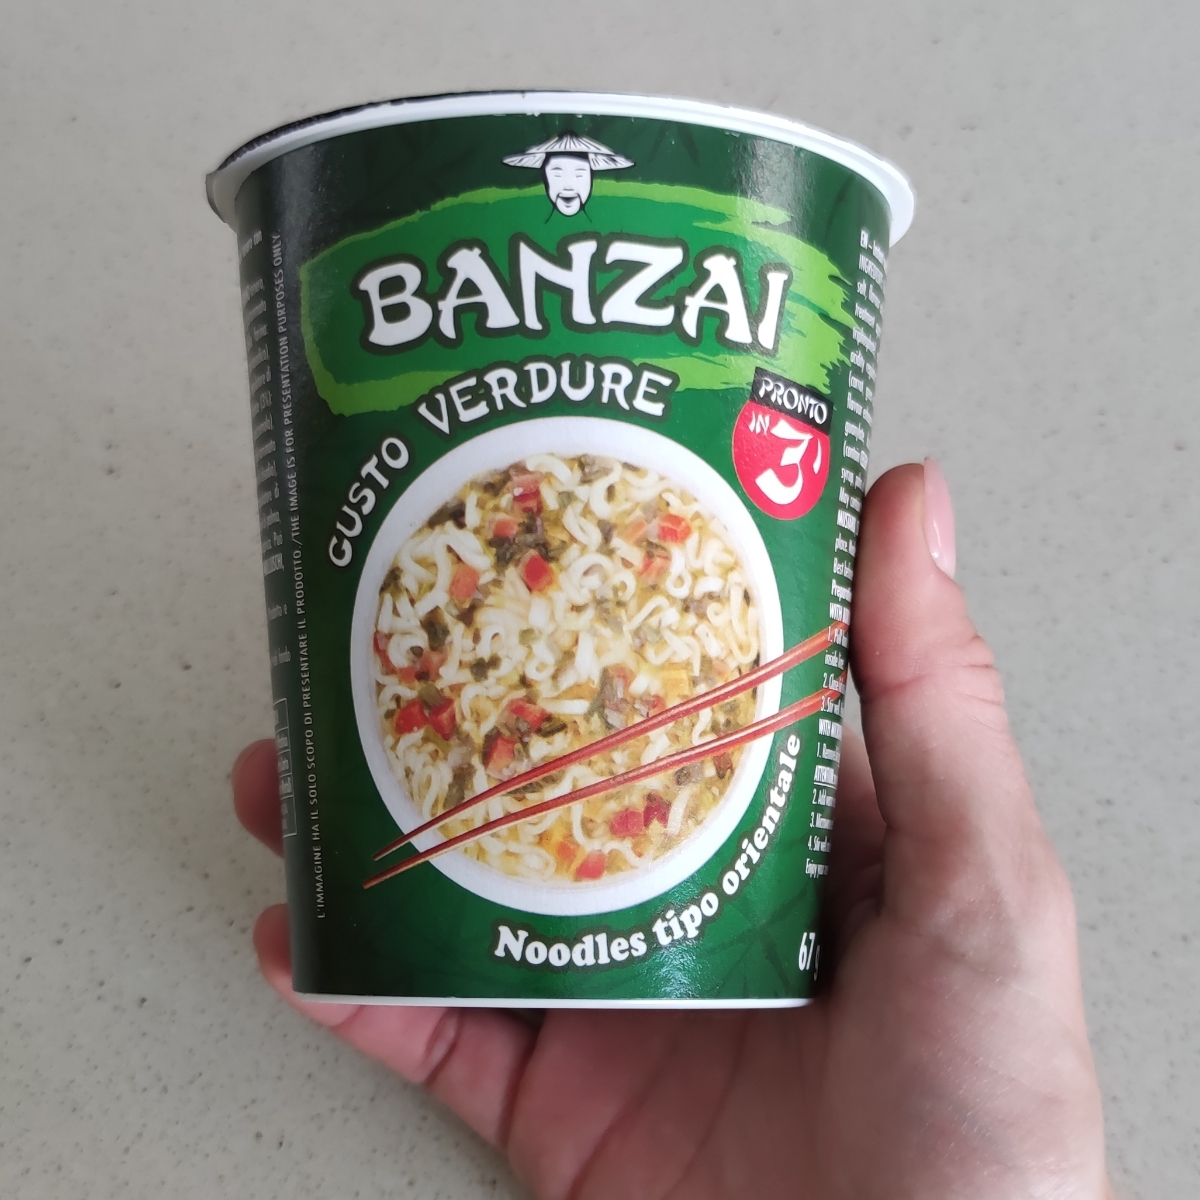 Banzai Gusto verdure Reviews